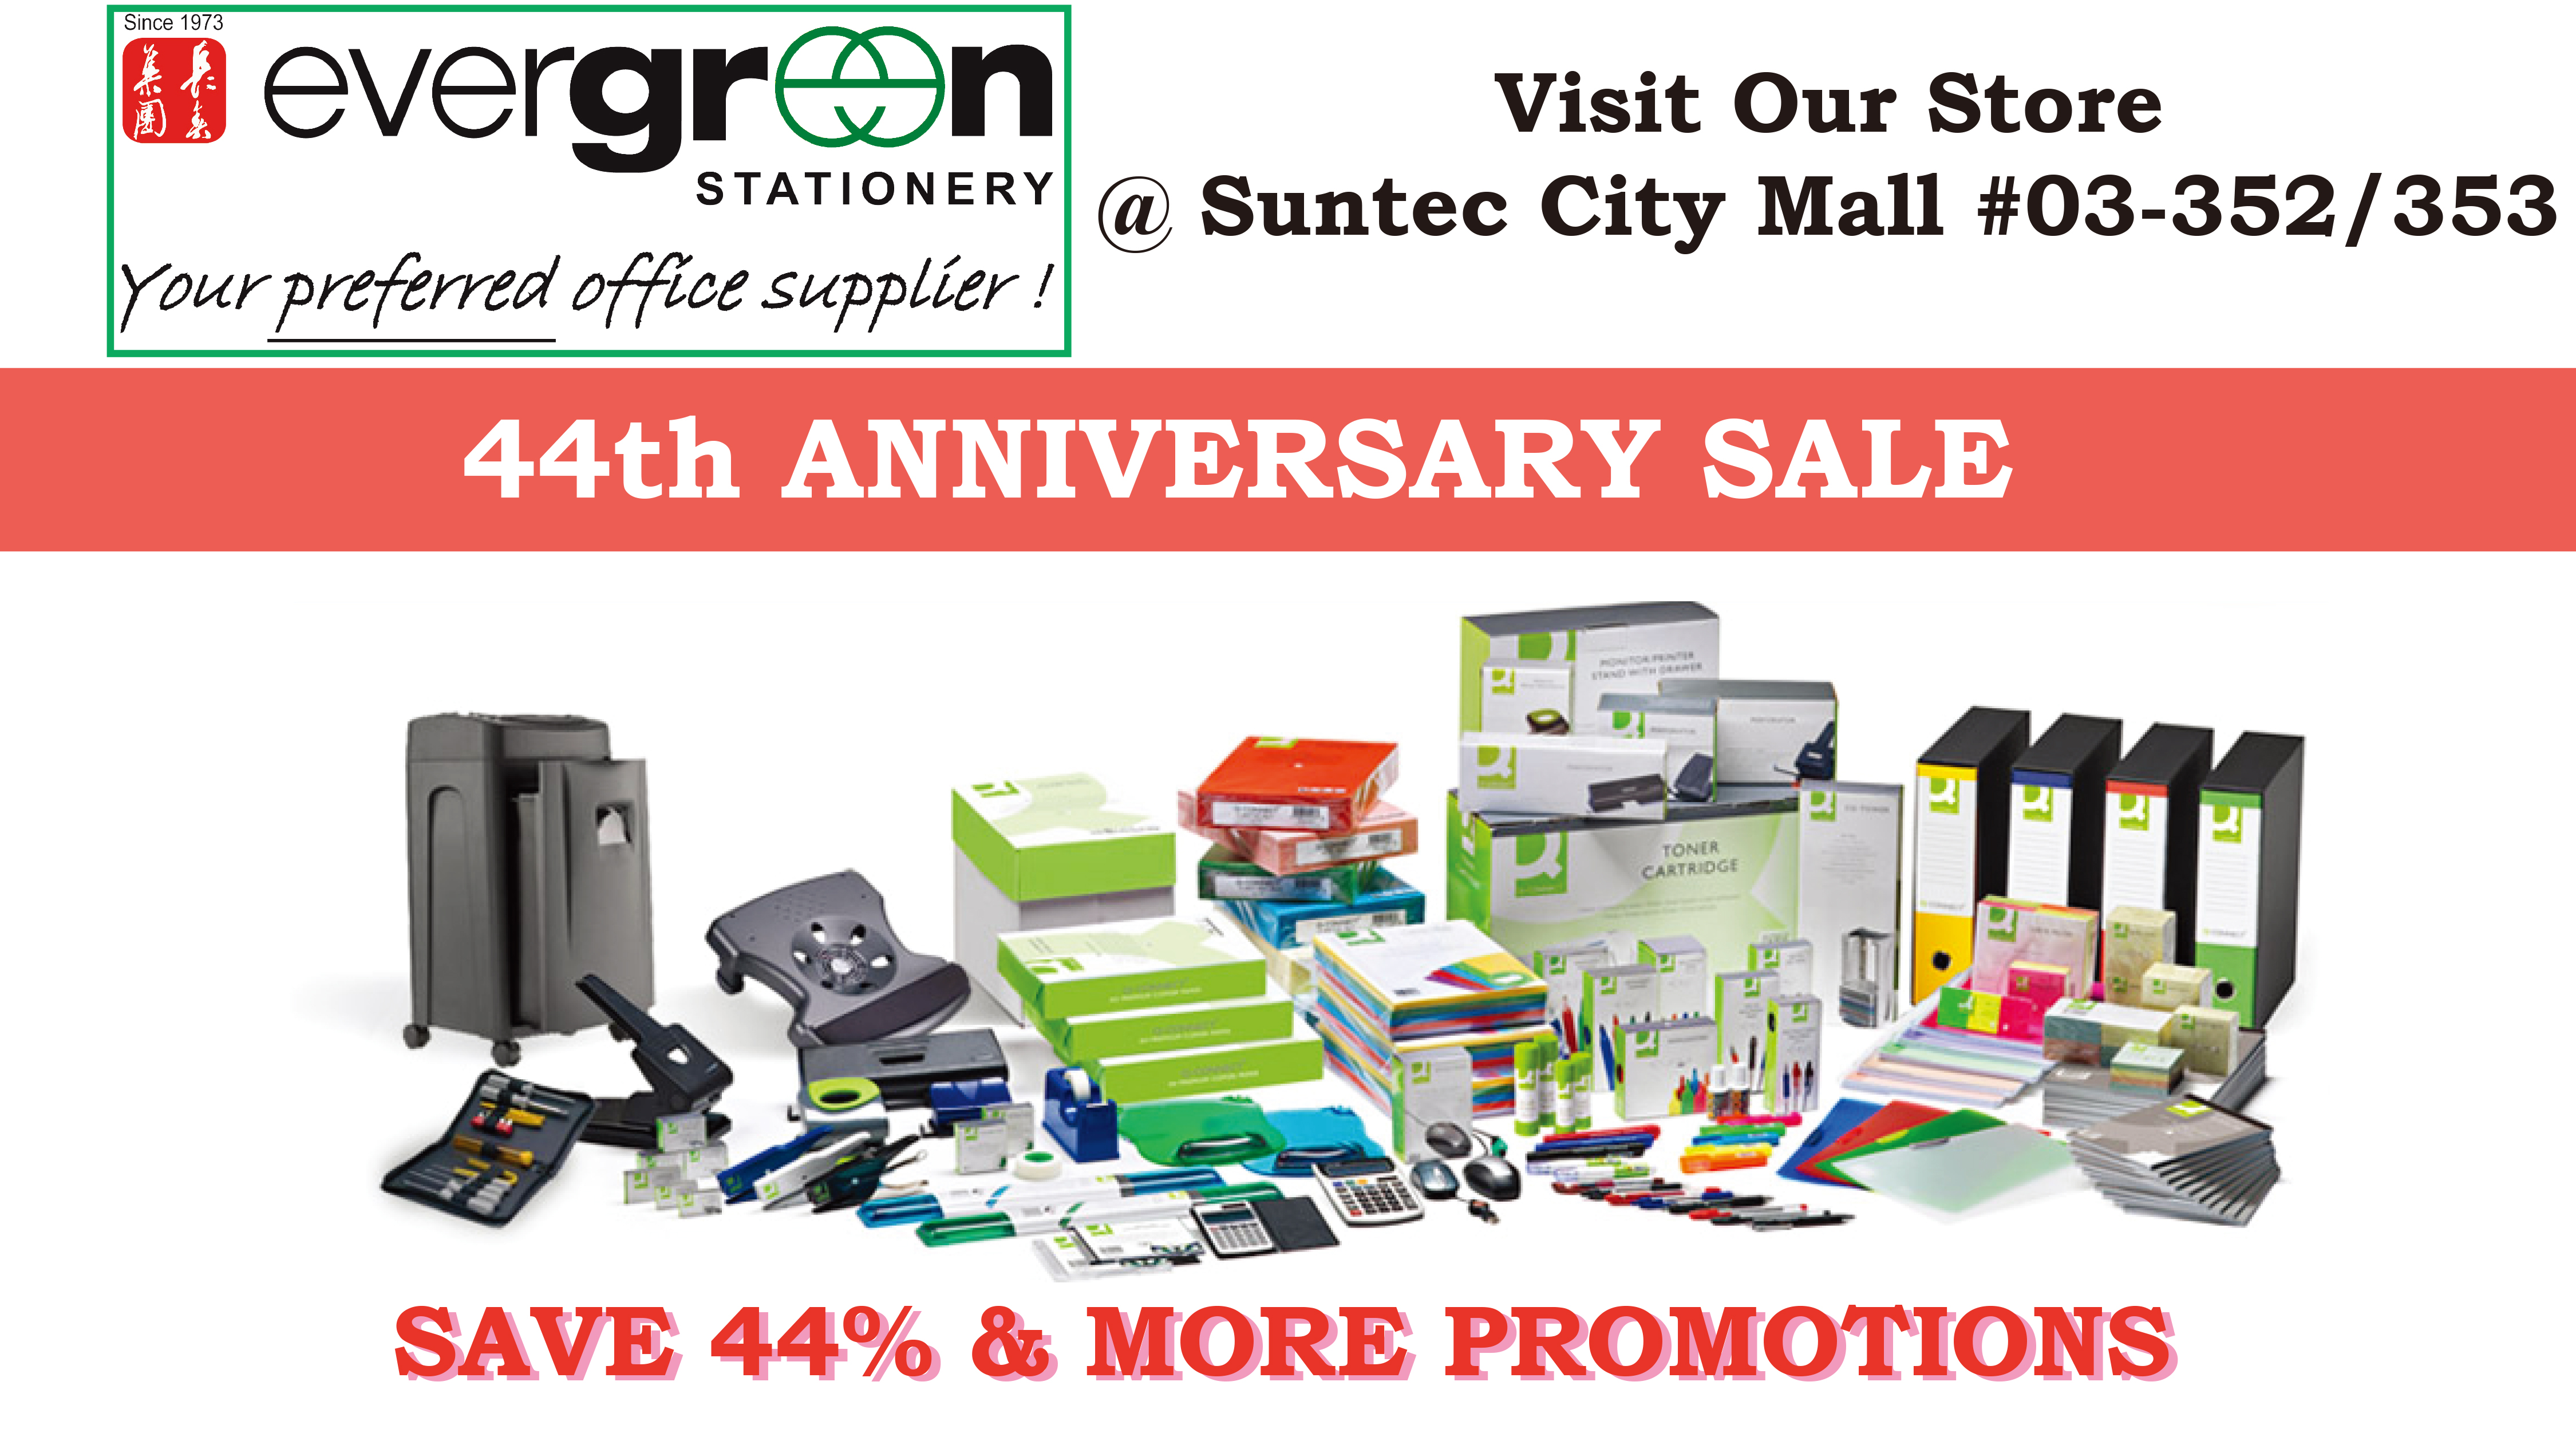 Evergreen Stationery 44th Anniversary Sale - Suntec City